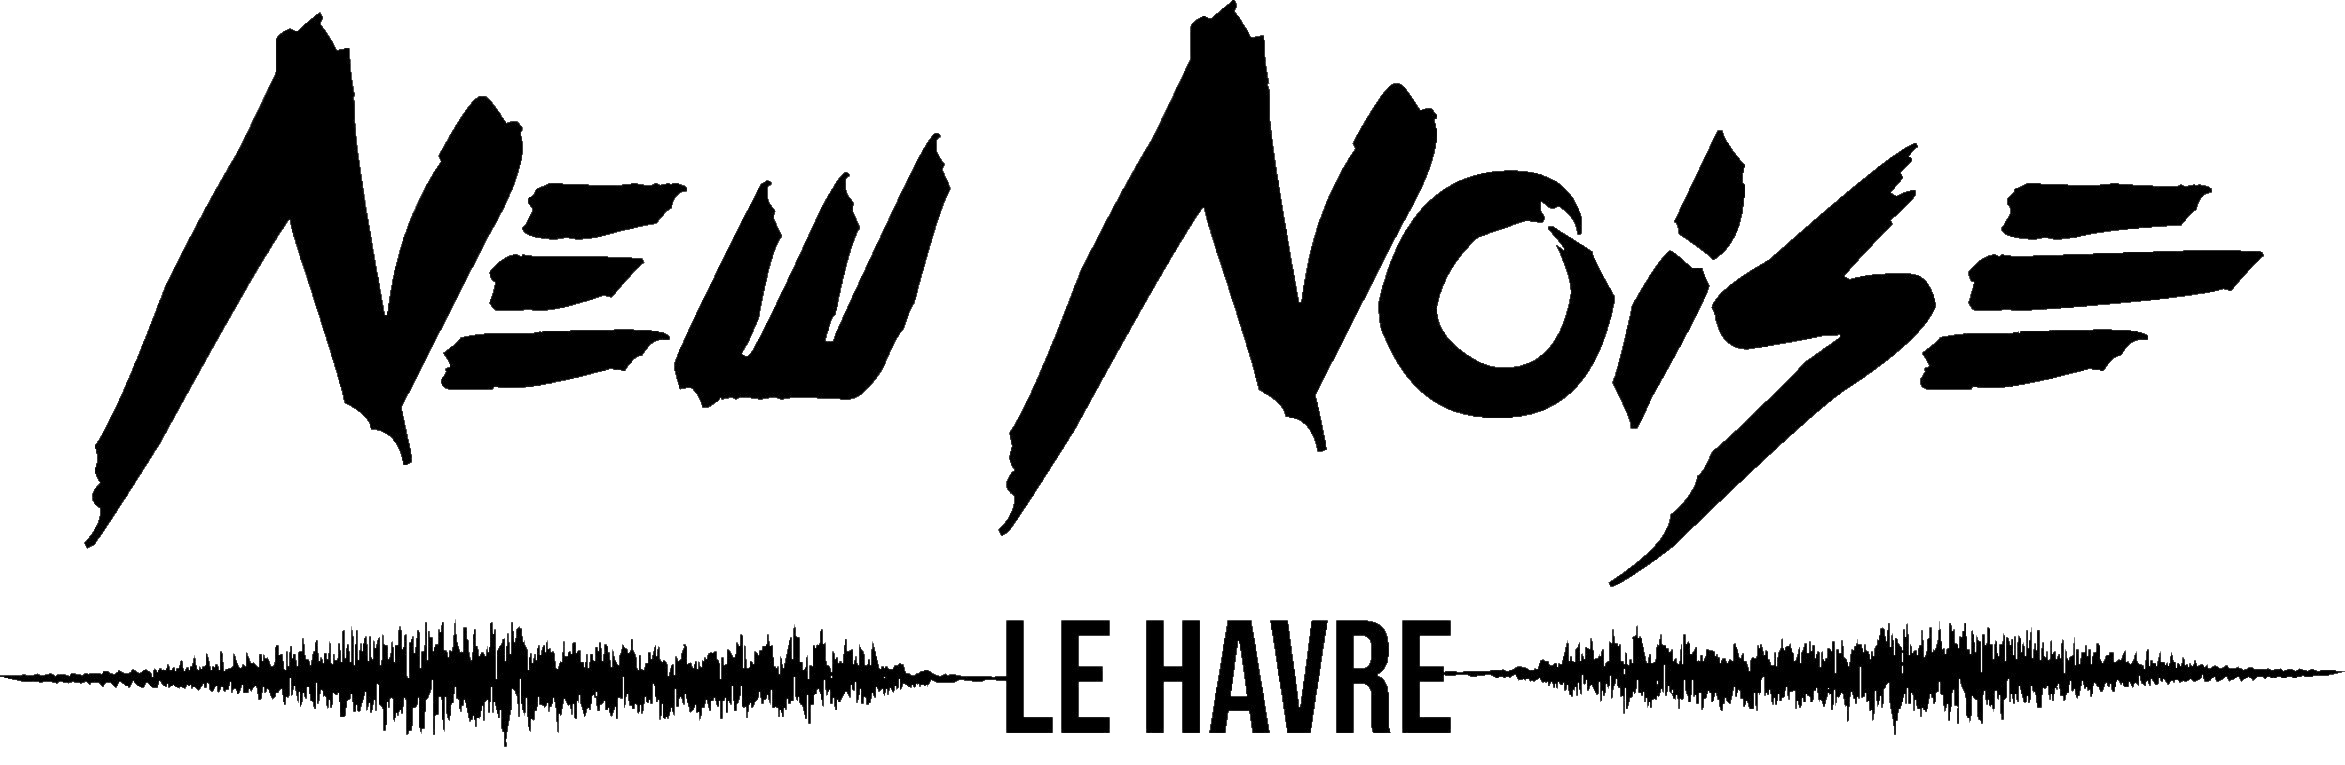 New Noise Le Havre